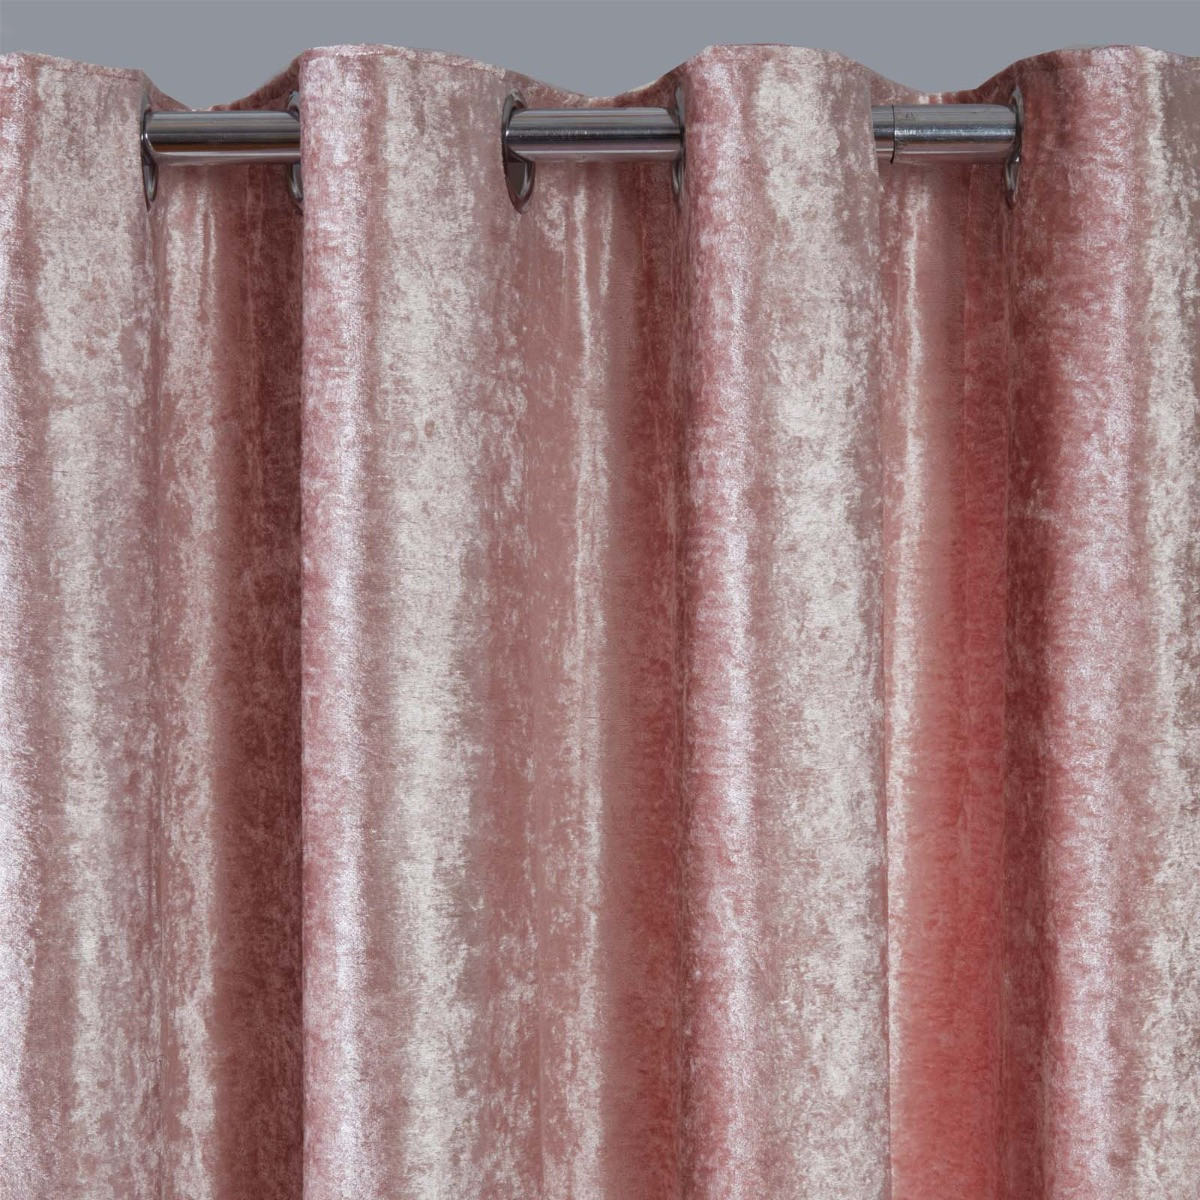 Sienna Home Crushed Velvet Eyelet Curtains, Blush Pink - 46" x 90">